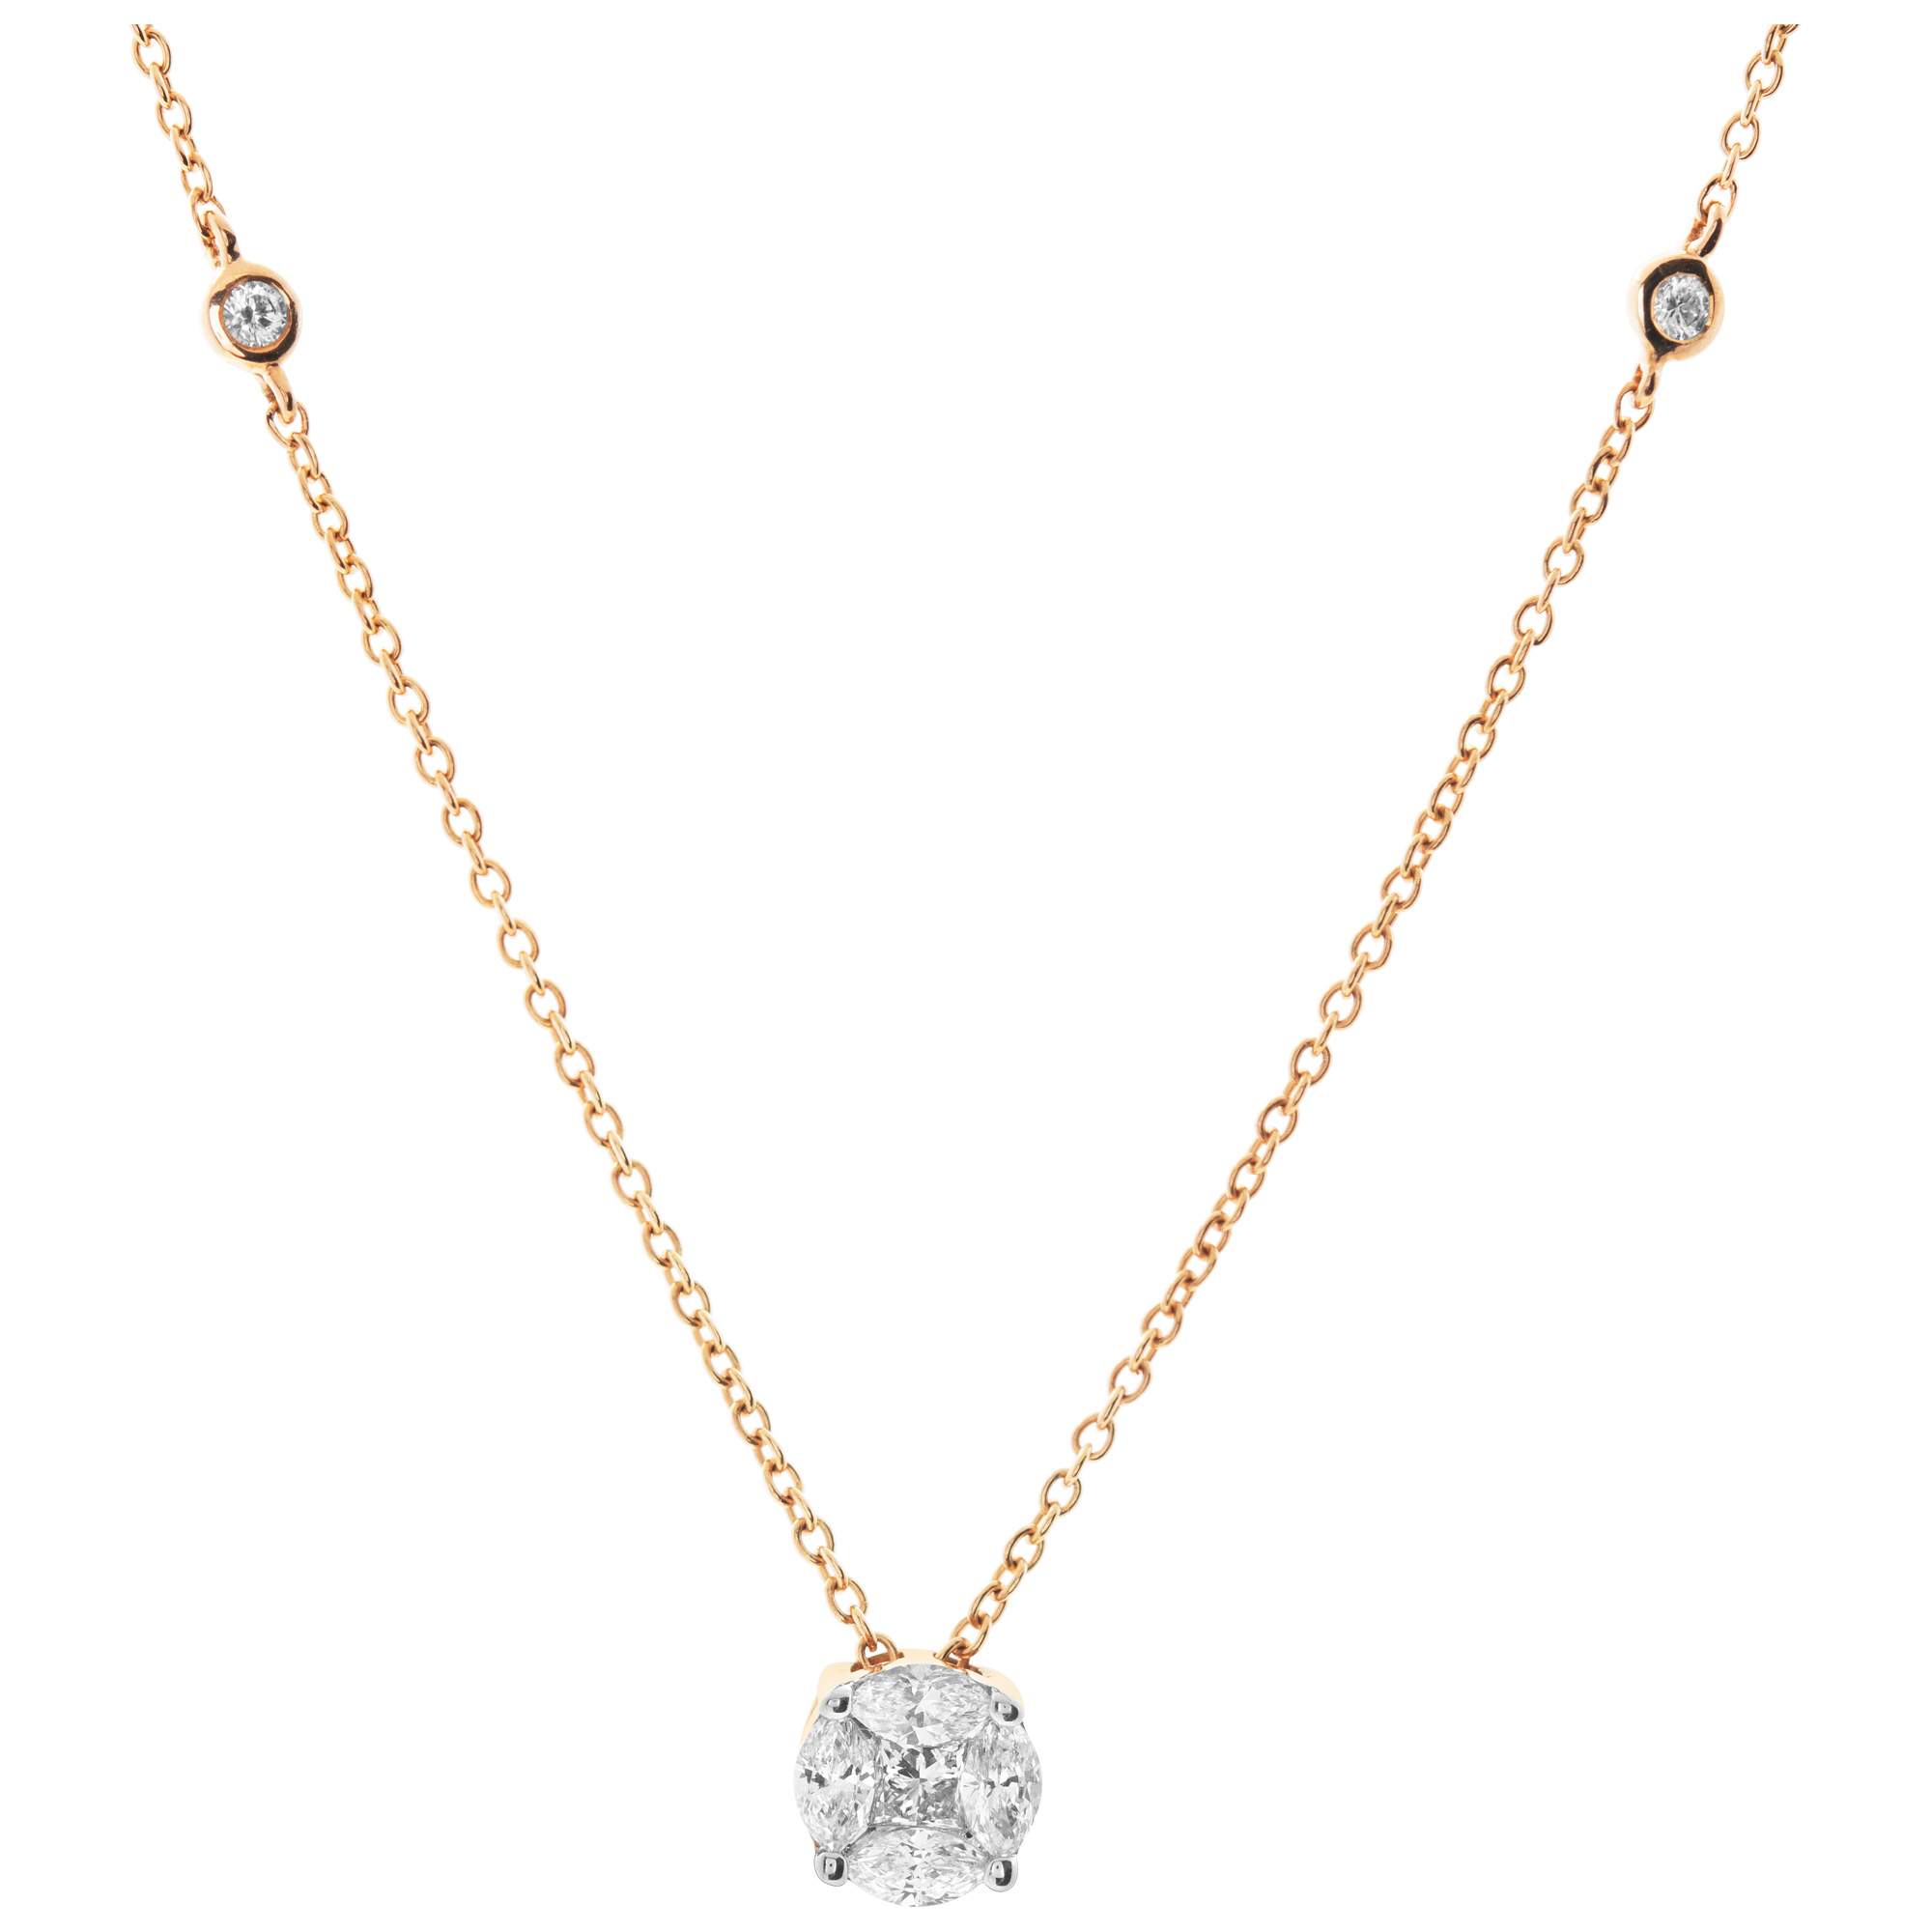 Illusion set round diamond pendant in 18k rose gold with 0.54 carat total diamond image 1